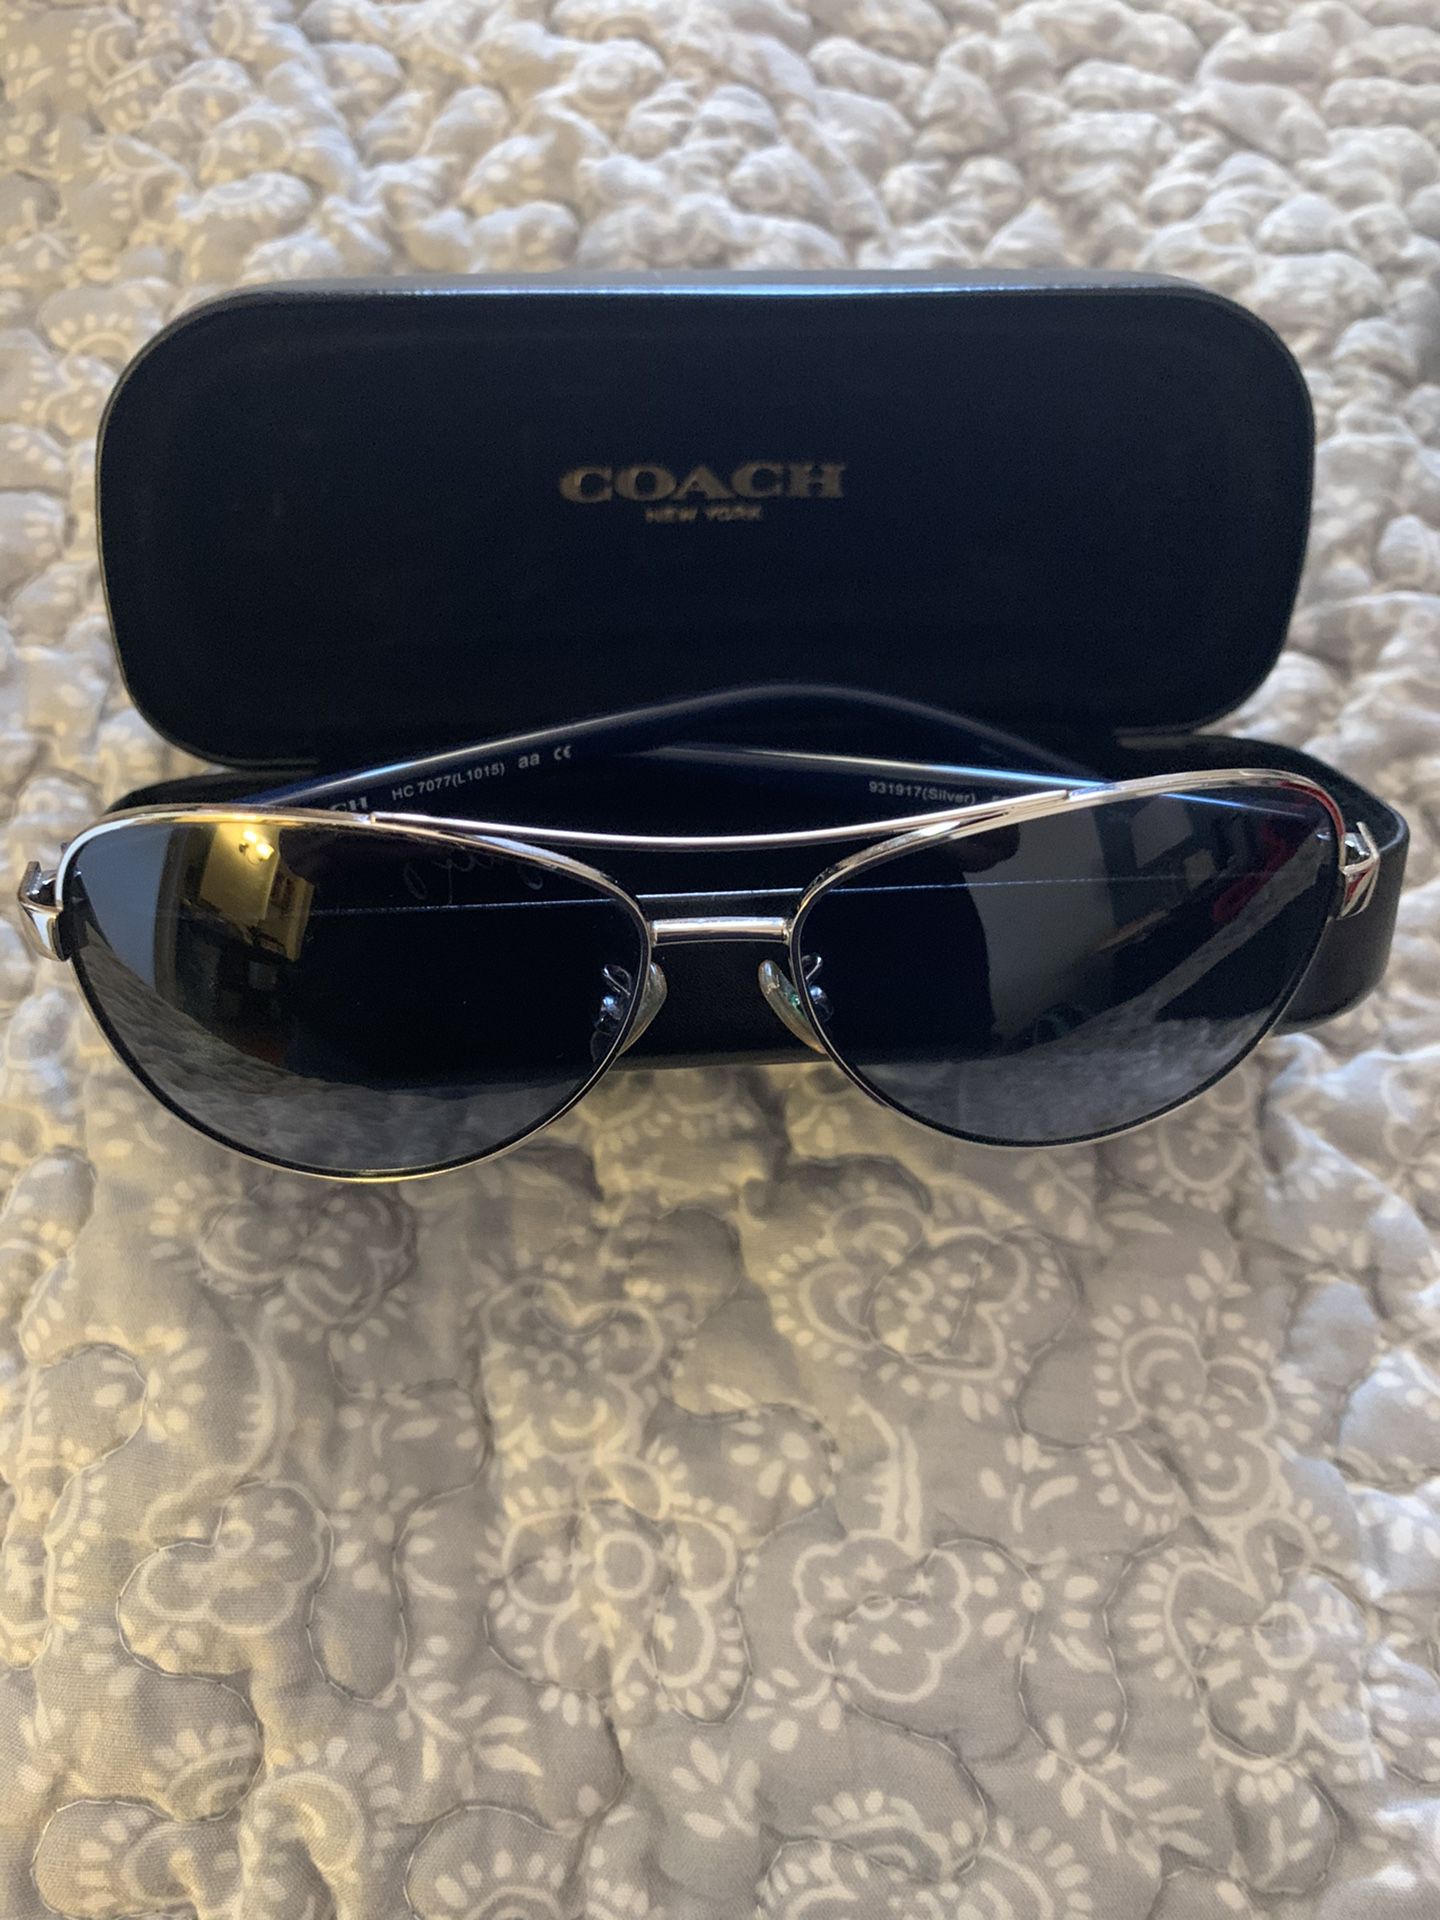 Coach aviator glasses